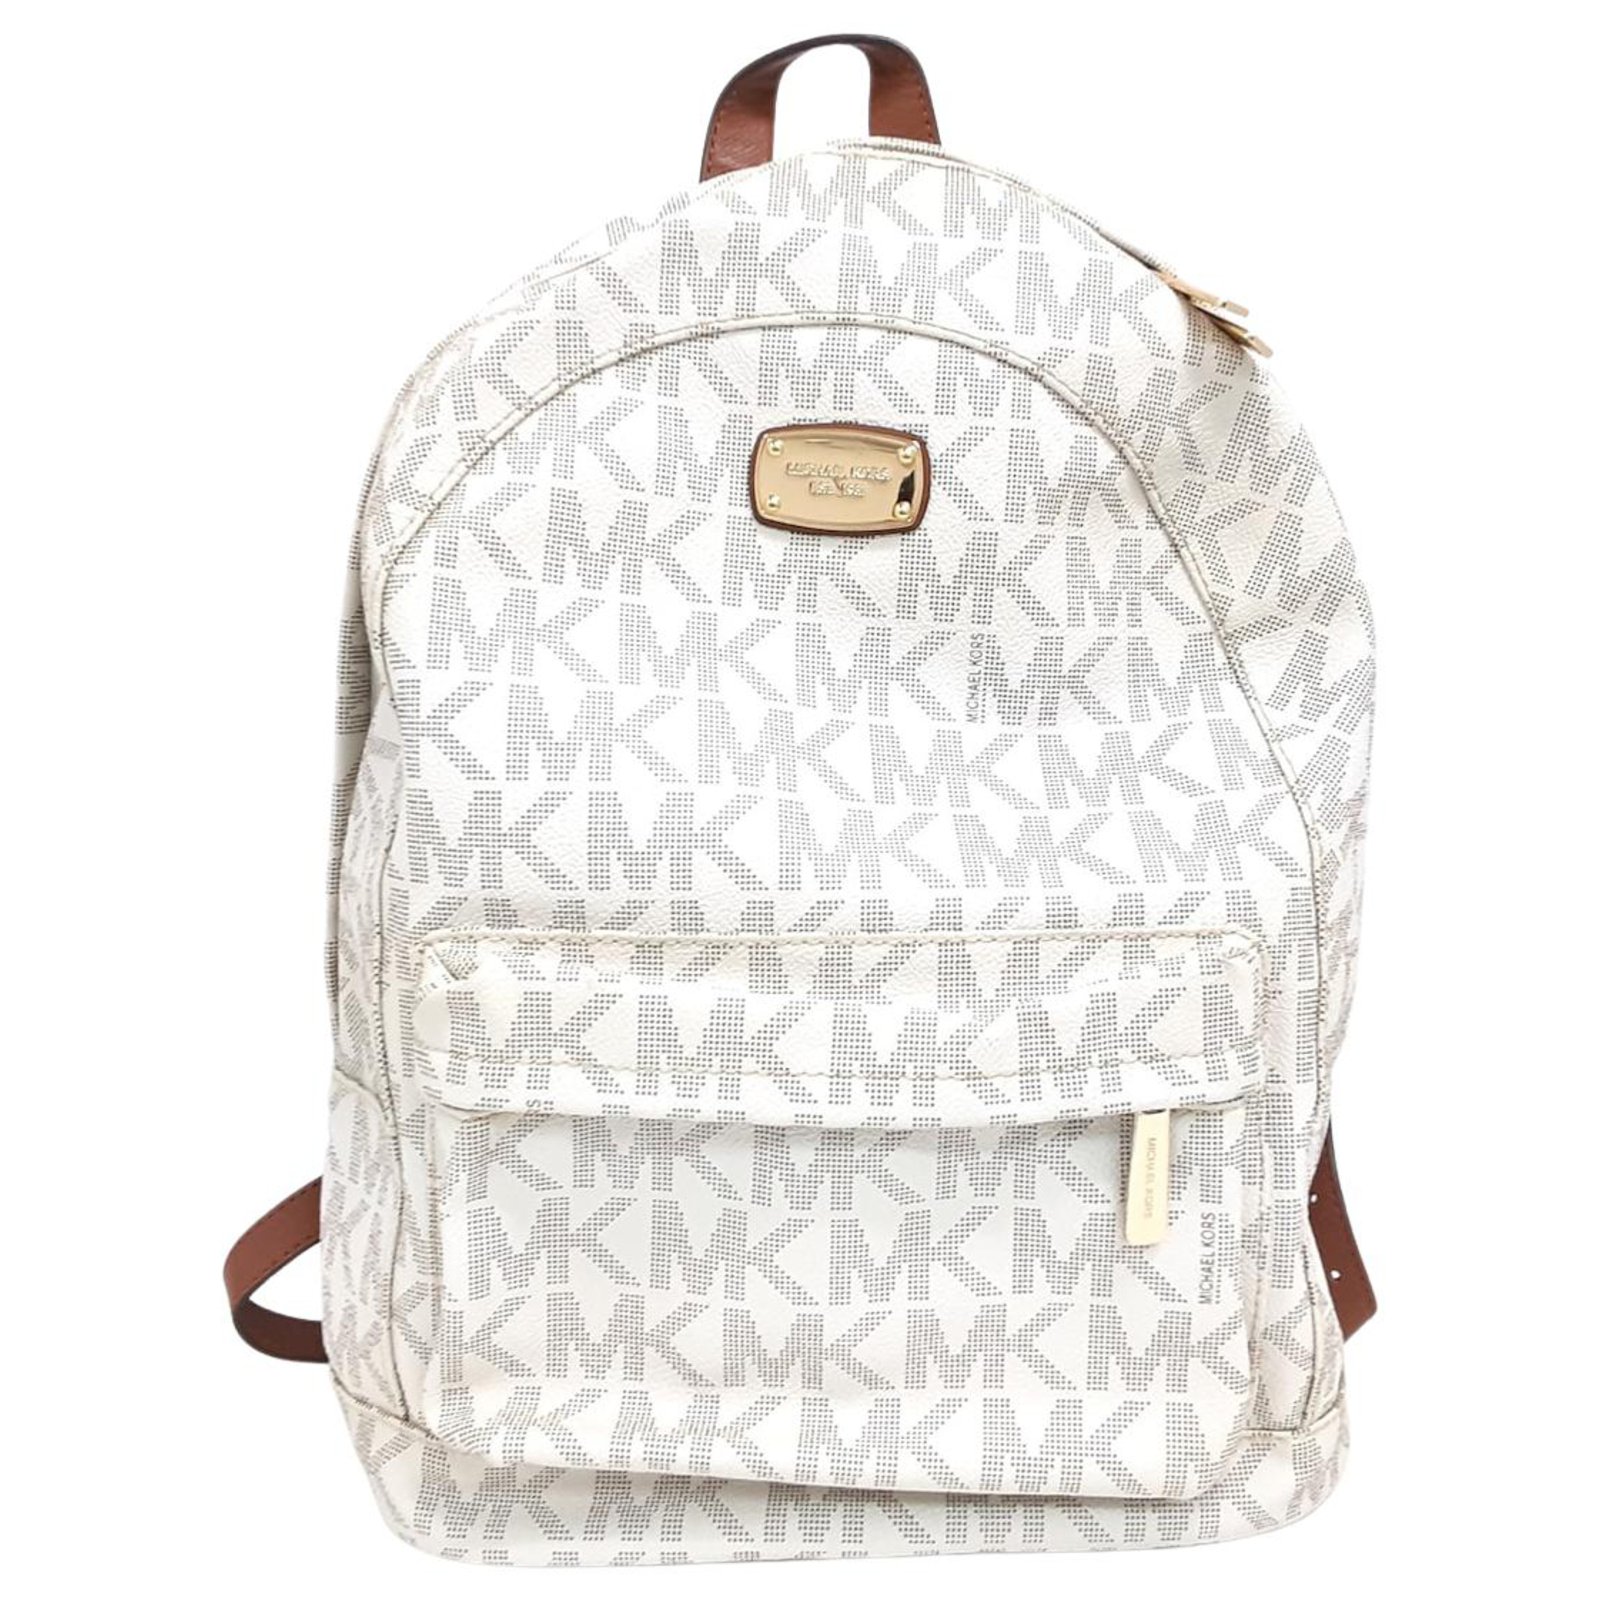 Michael Kors Jaycee Medium Zip Pocket Backpack Bag Mk Logo Brown Powder  Blush | eBay